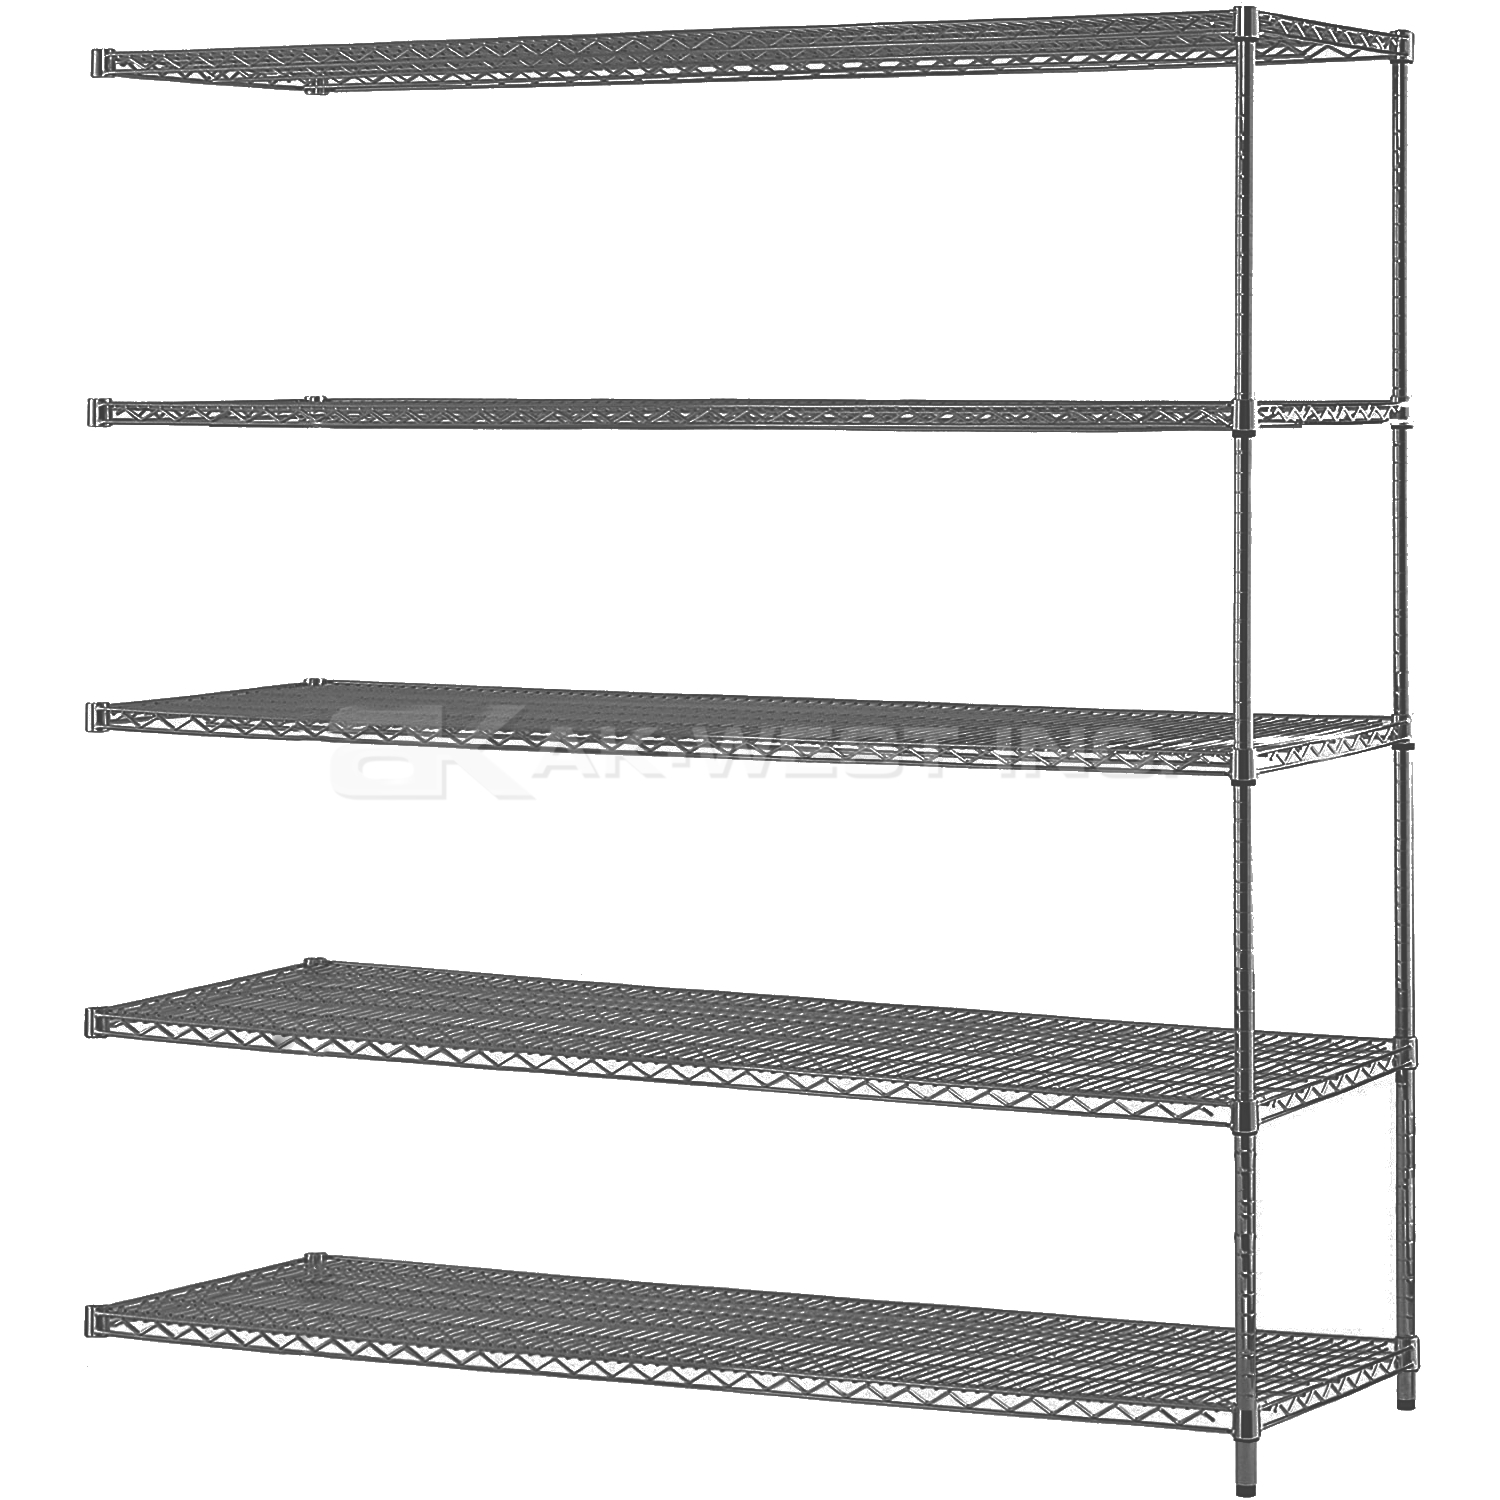 Grey, 18"D x 60"W x 86"H, 6 Shelf, Wire Shelving Adder Kit